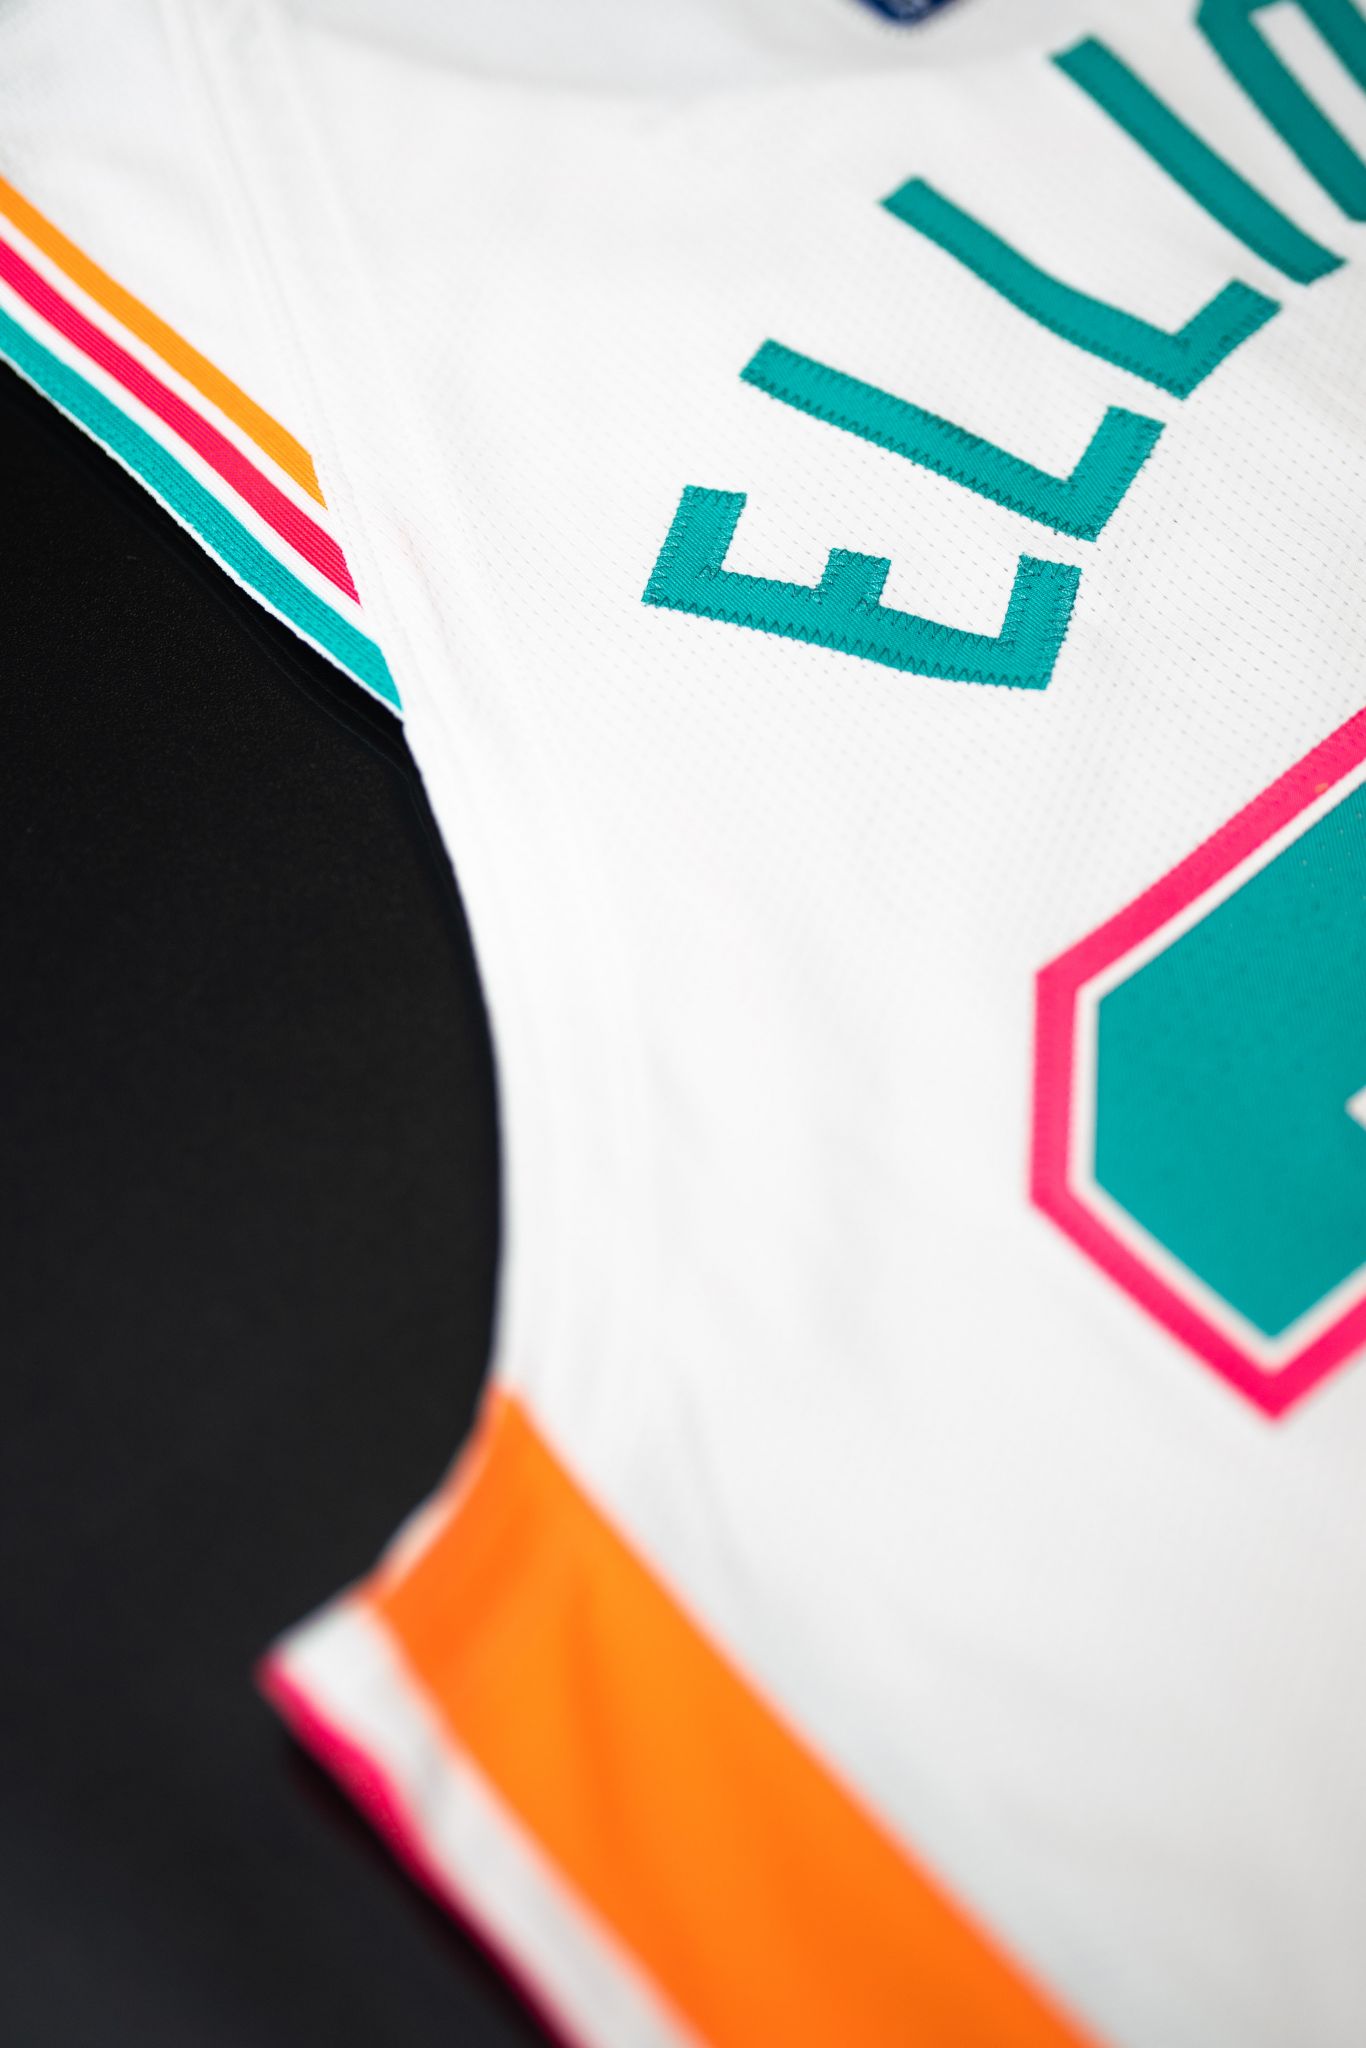 Leaked Spurs 2021 'City Edition' jerseys feature retro 'Fiesta' colors